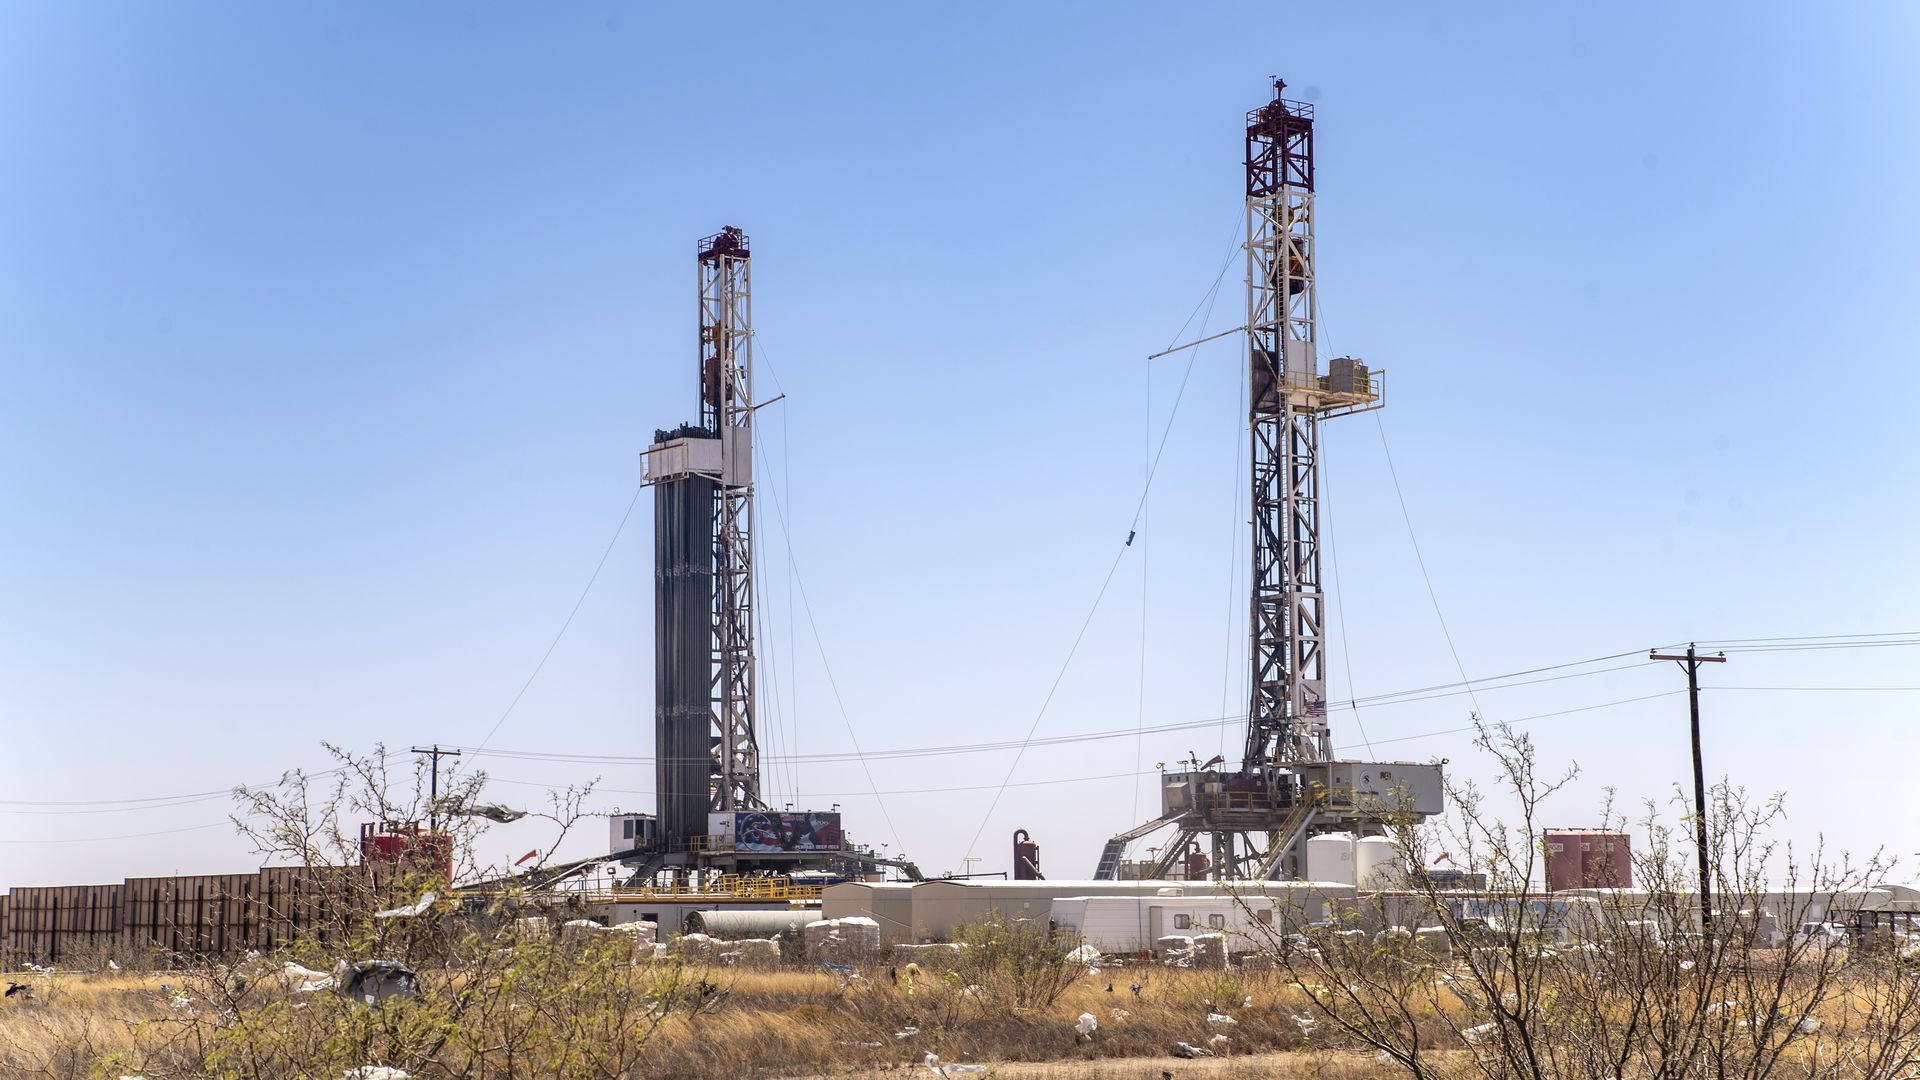 Oil rigs in Texas